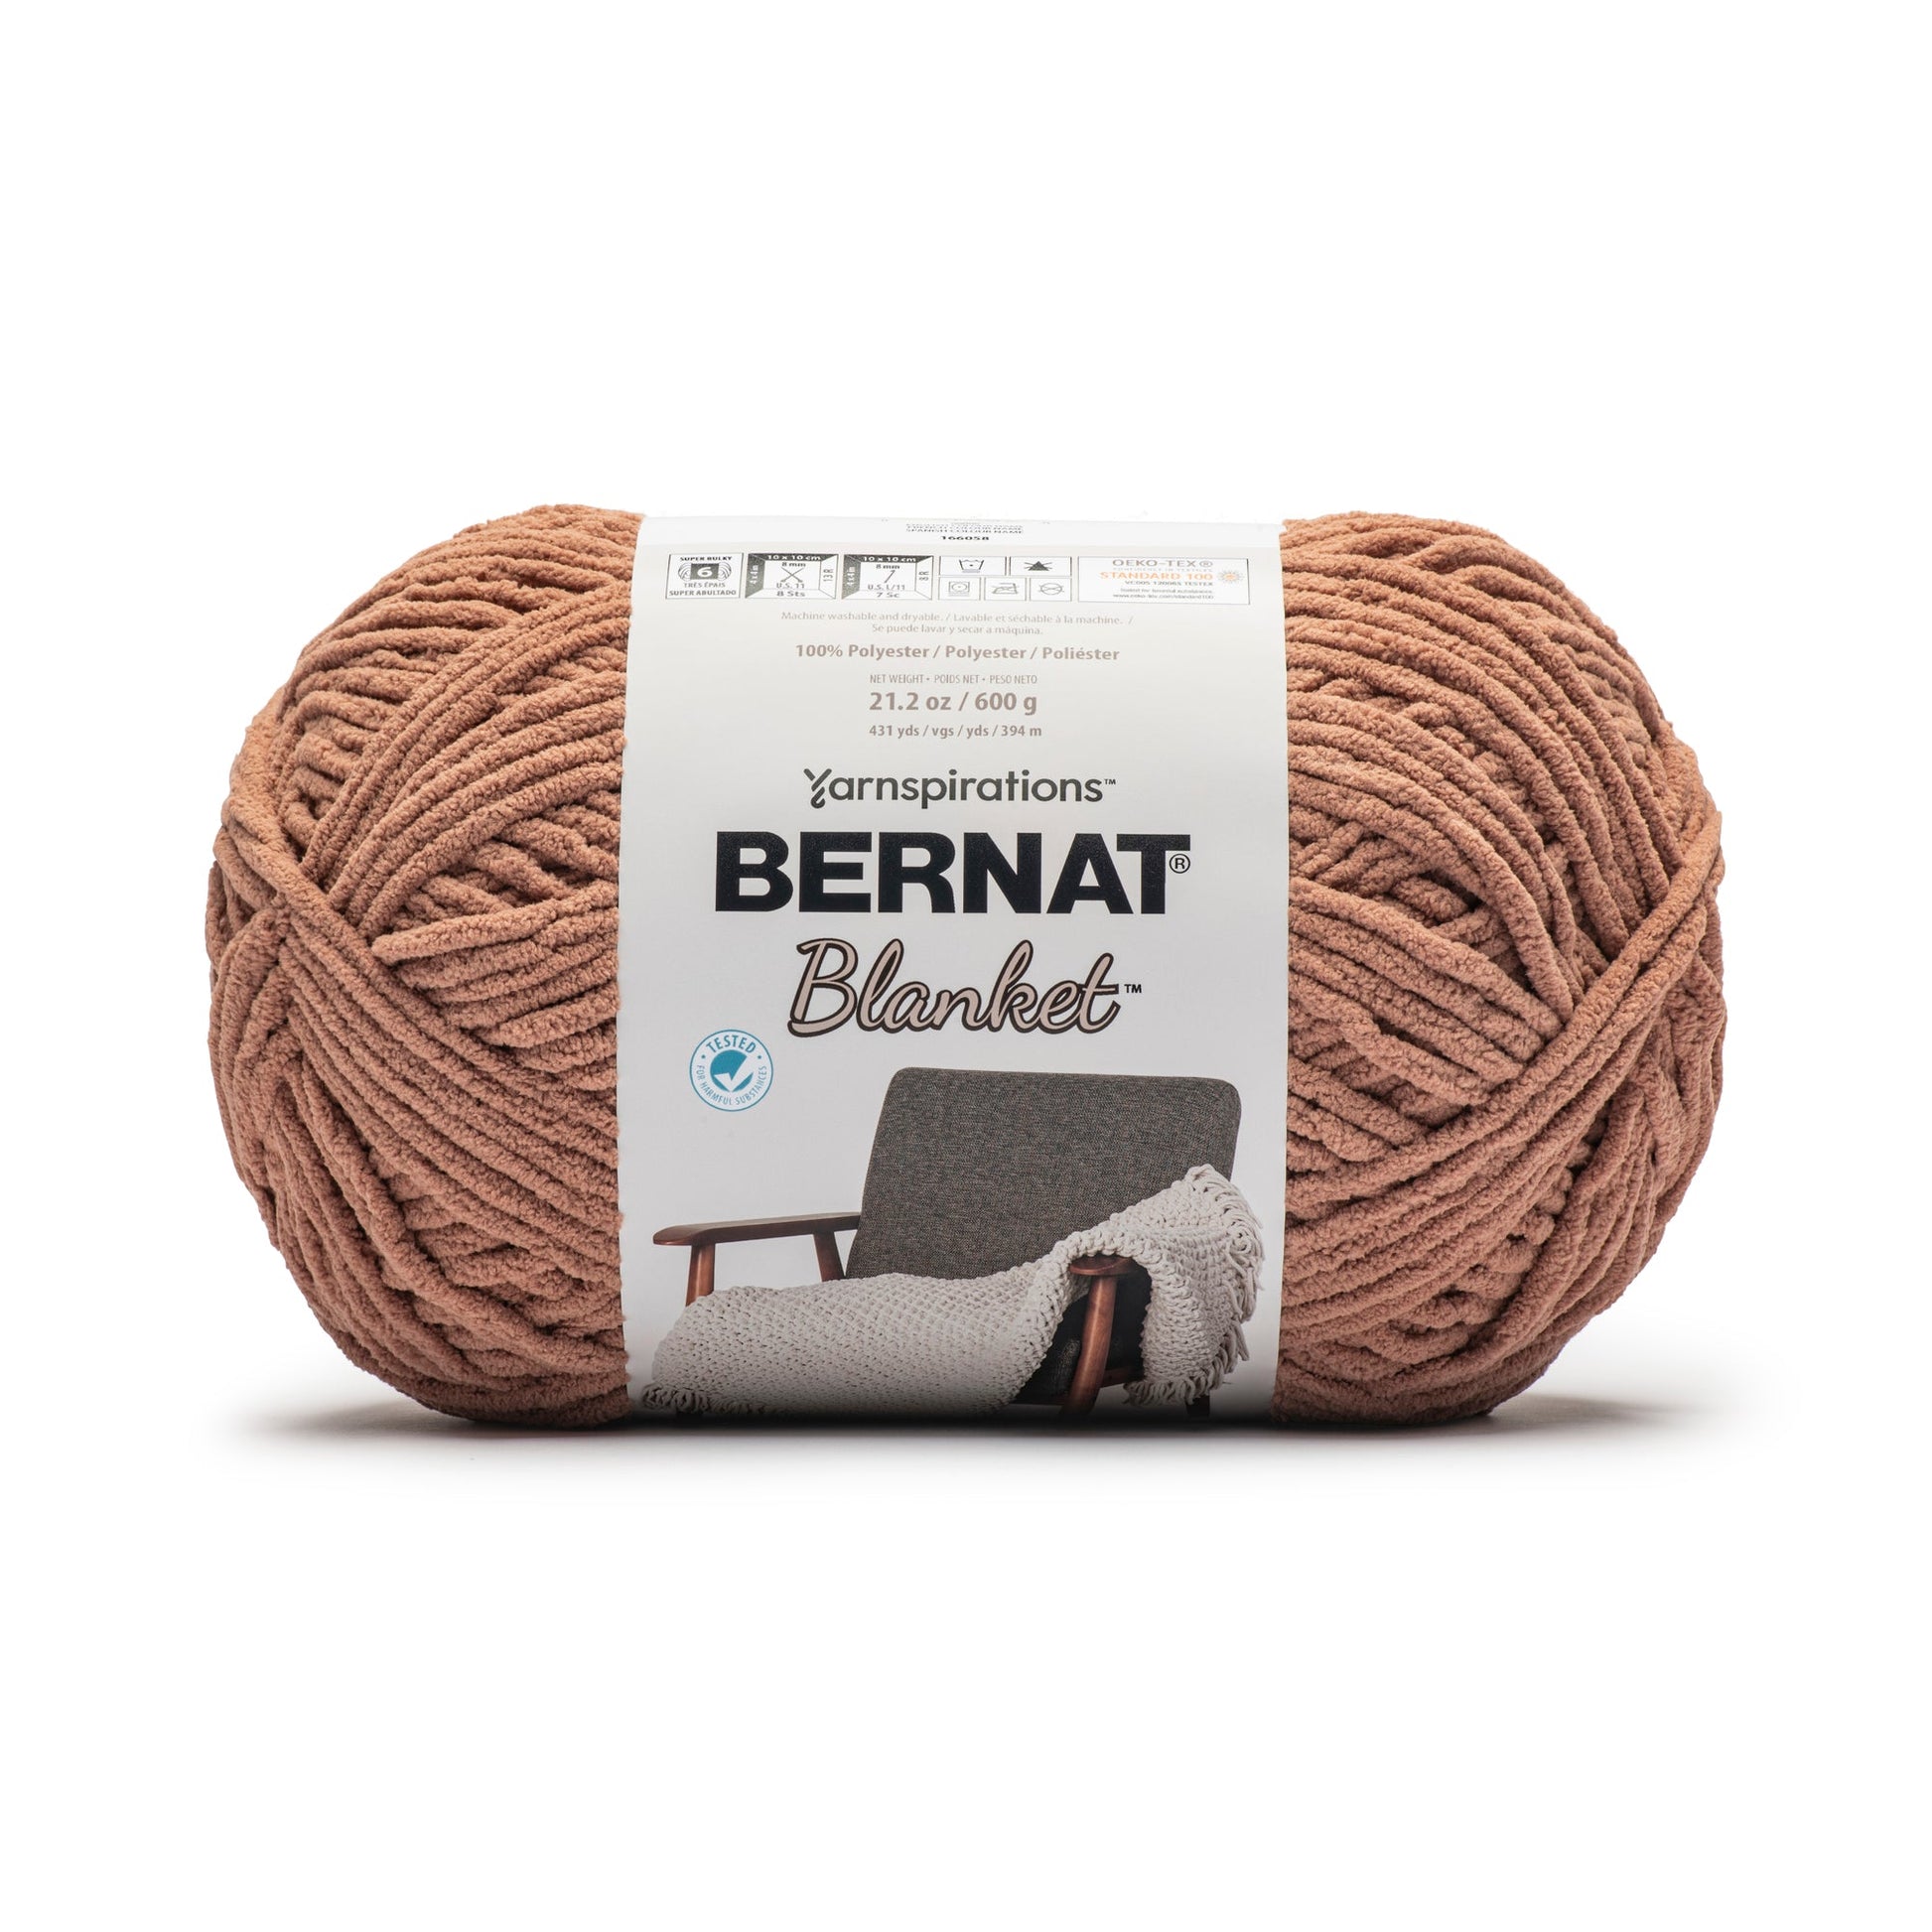 Bernat Blanket Extra Thick Yarn (600g/21.2oz) - Clearance Shades*, Yarnspirations